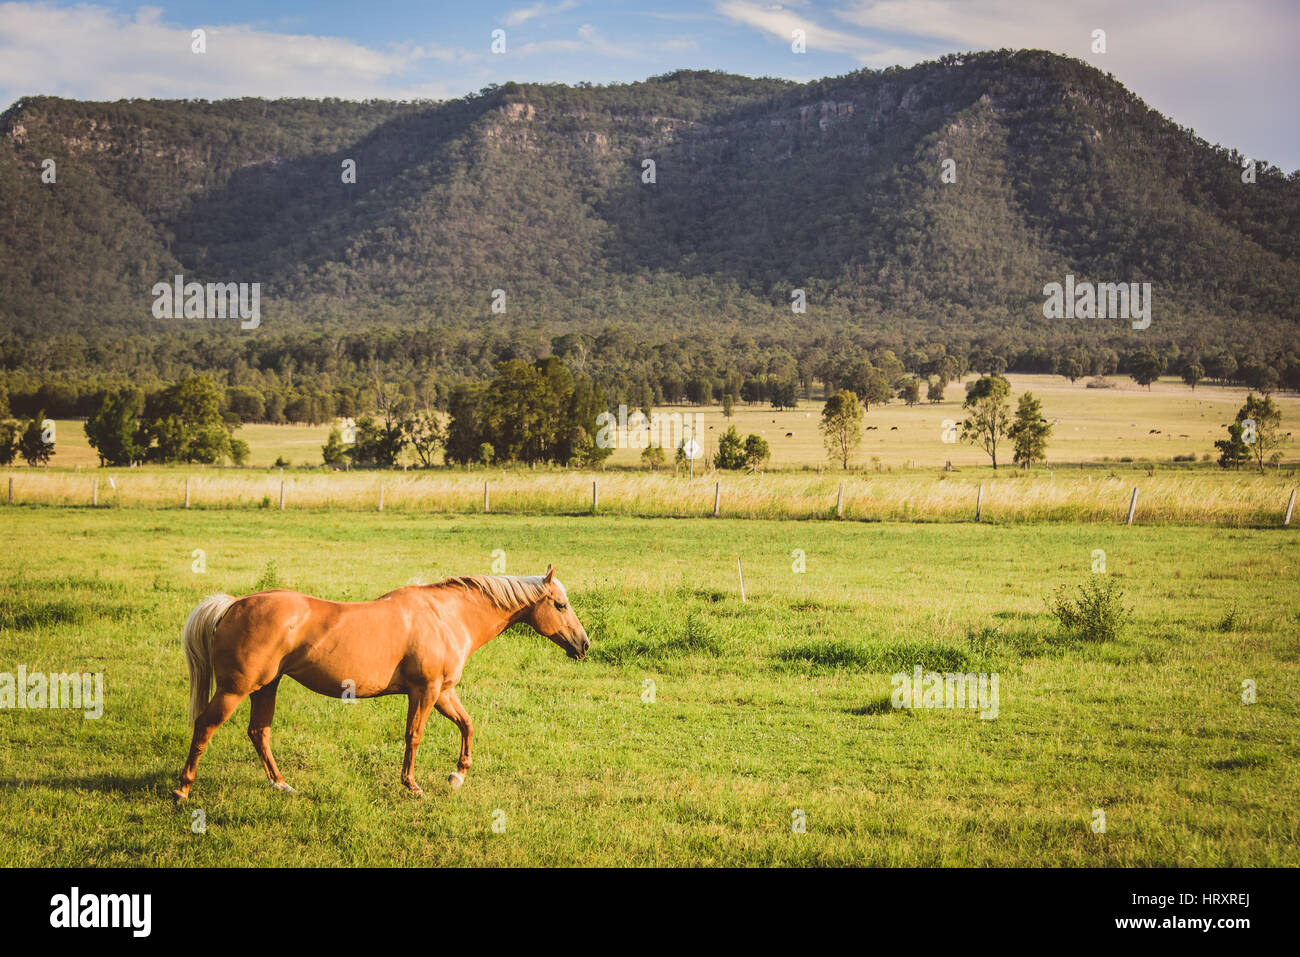 Horse in a field, Australia Stock Photo